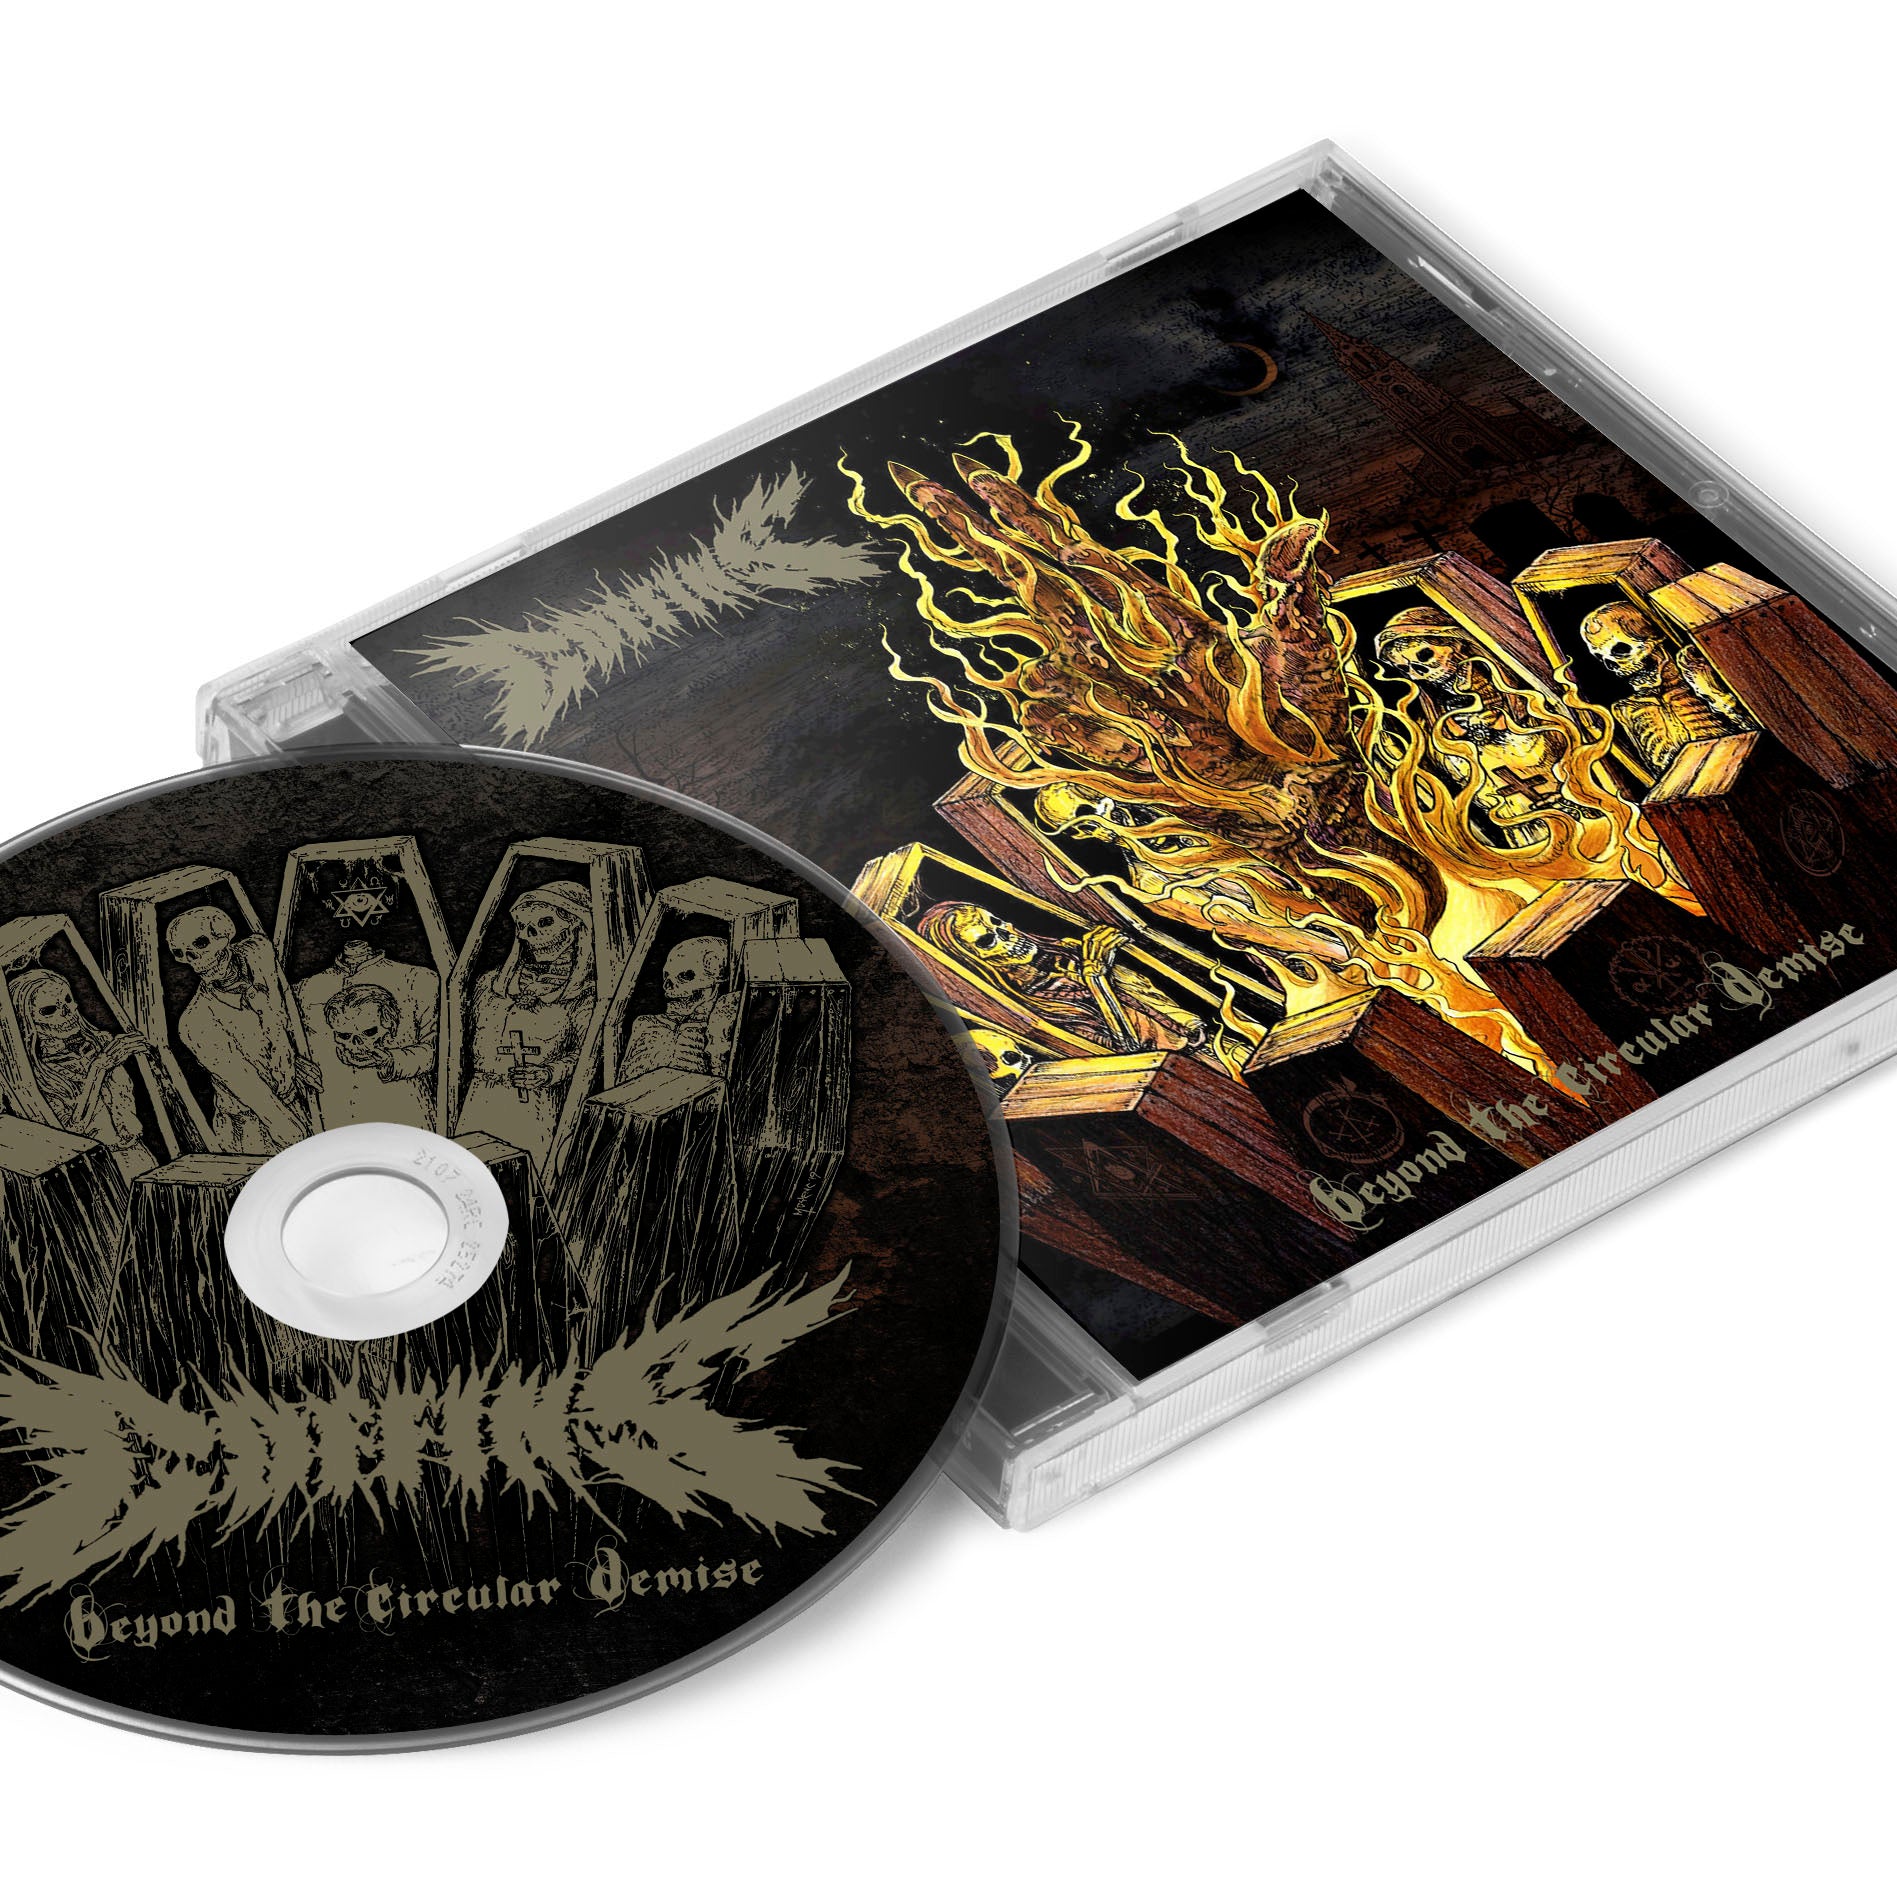 Coffins "Beyond the Circular Demise" CD